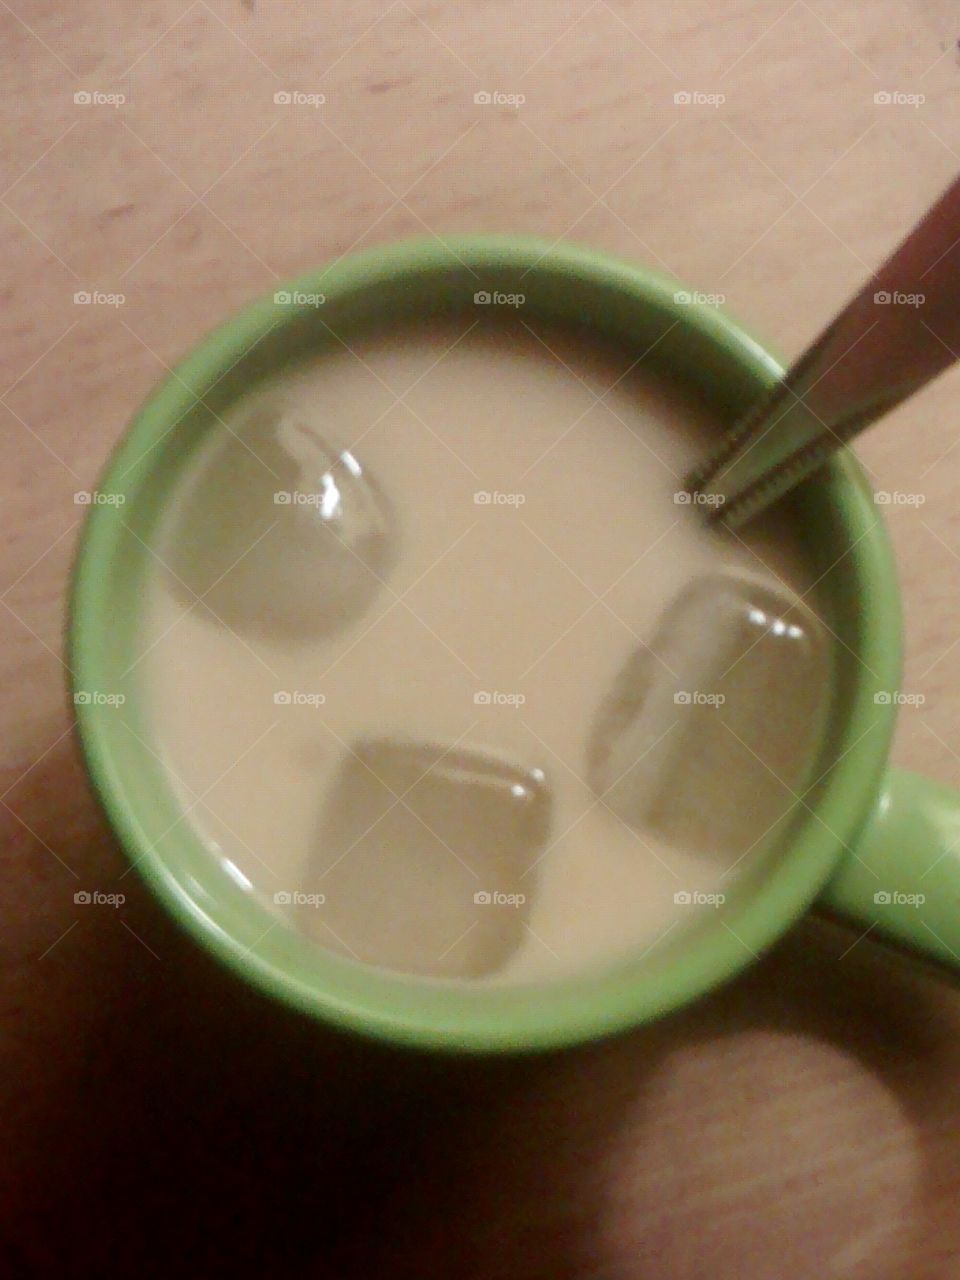 Iced Coffee in a Green Mug